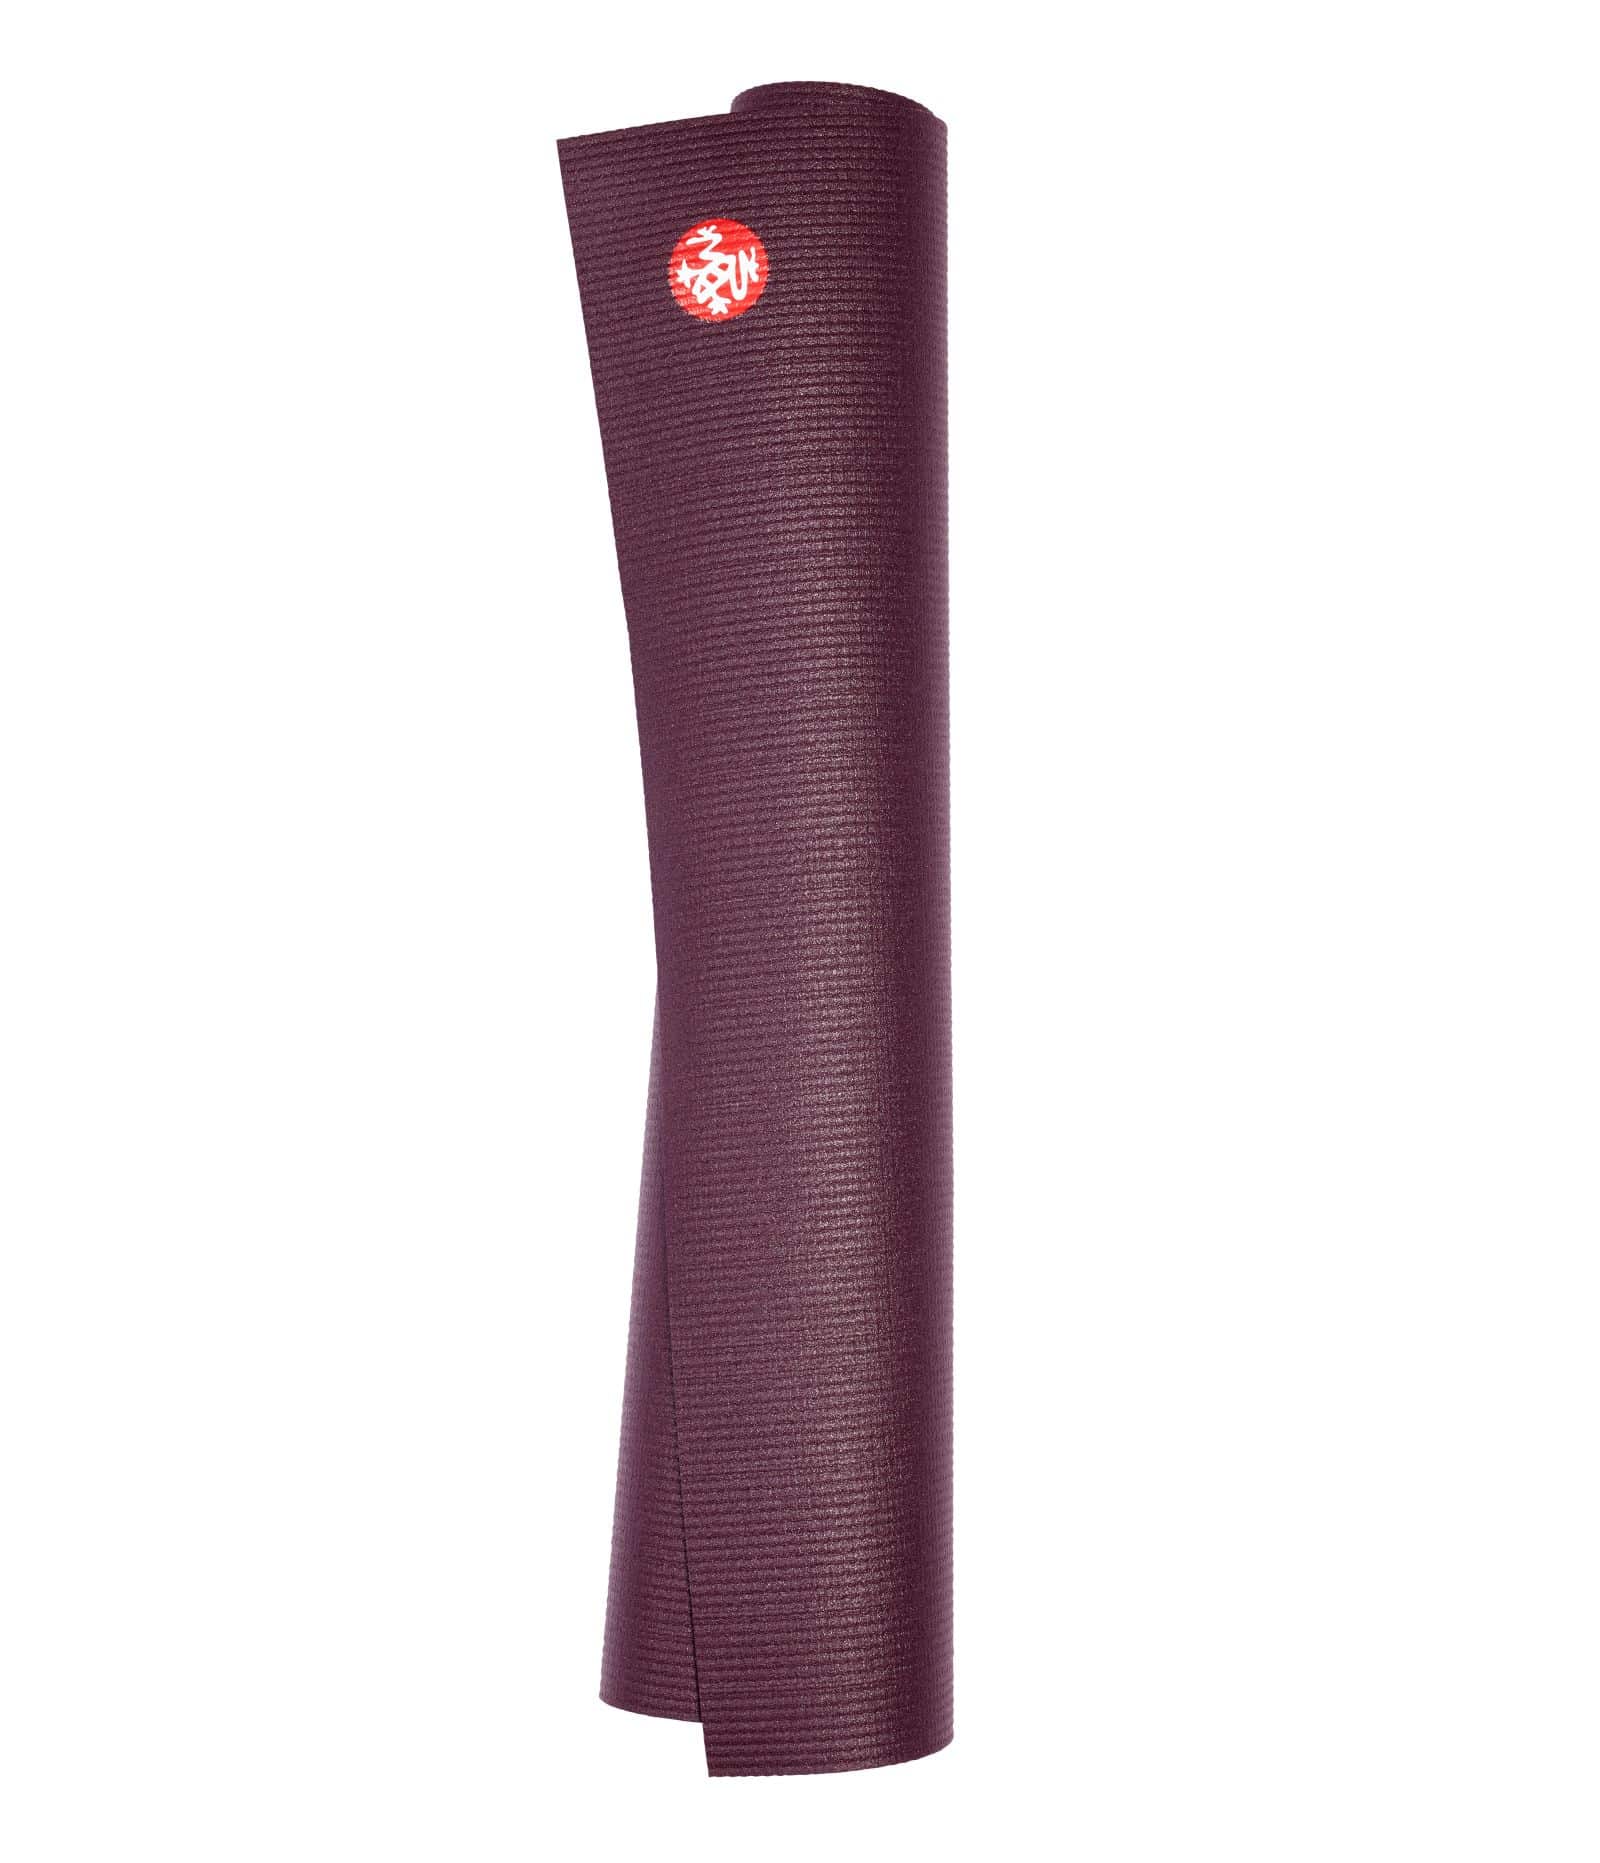 Manduka Pro Travel Yoga Mat - Indulge